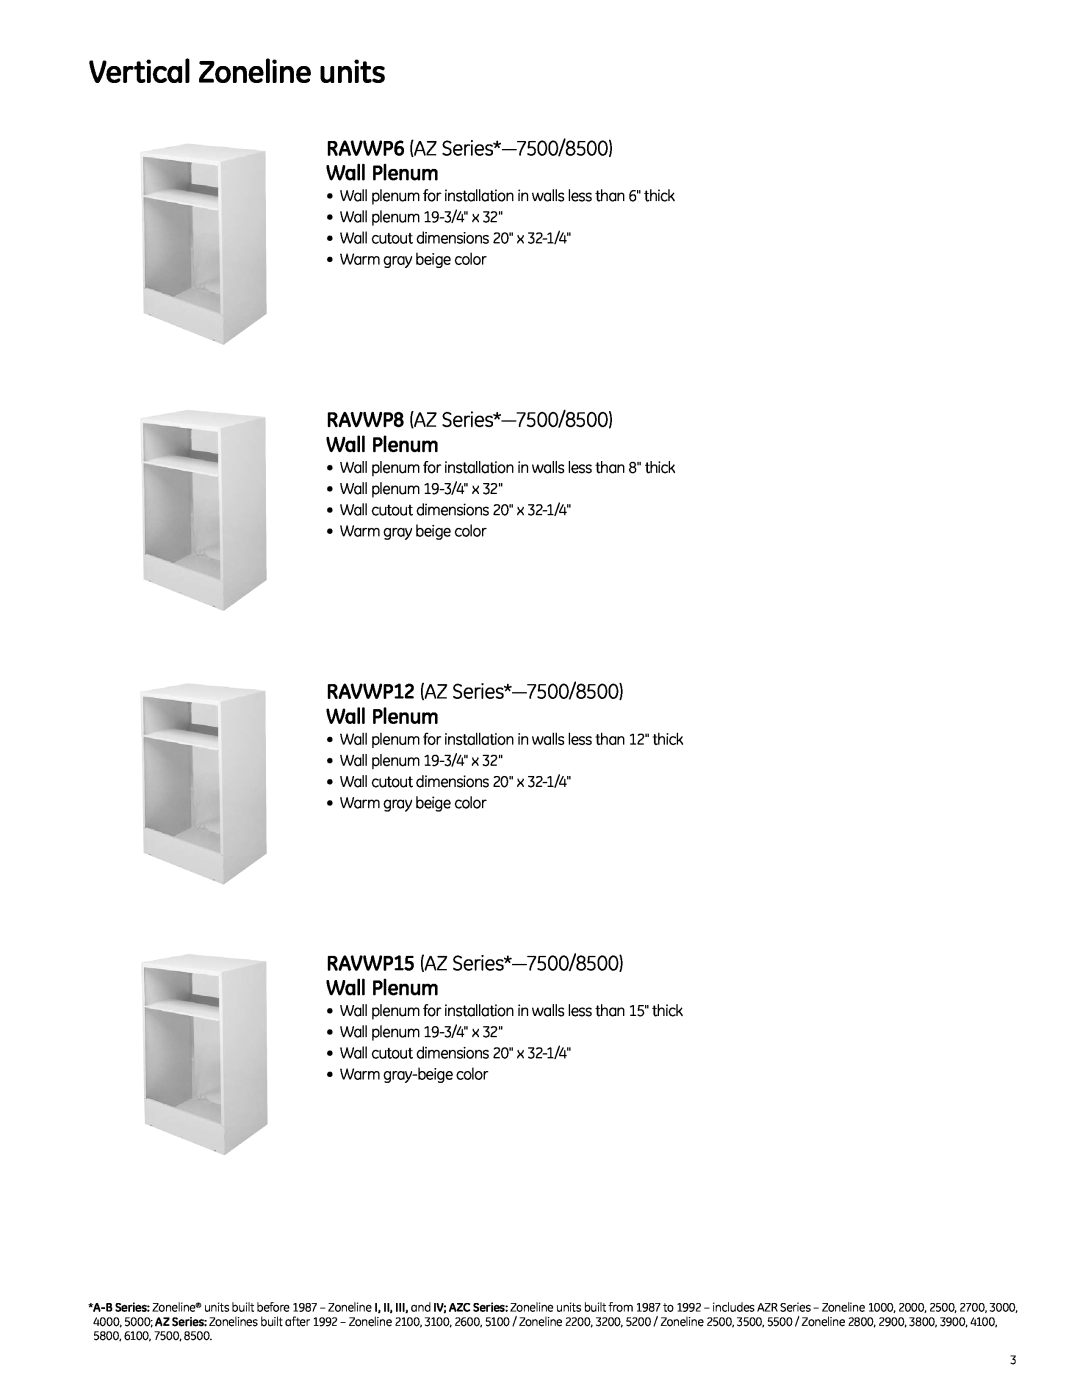 GE 2010 manual Vertical Zoneline units, RAVWP6 AZ Series*-7500/8500, Wall Plenum, RAVWP8 AZ Series*-7500/8500 